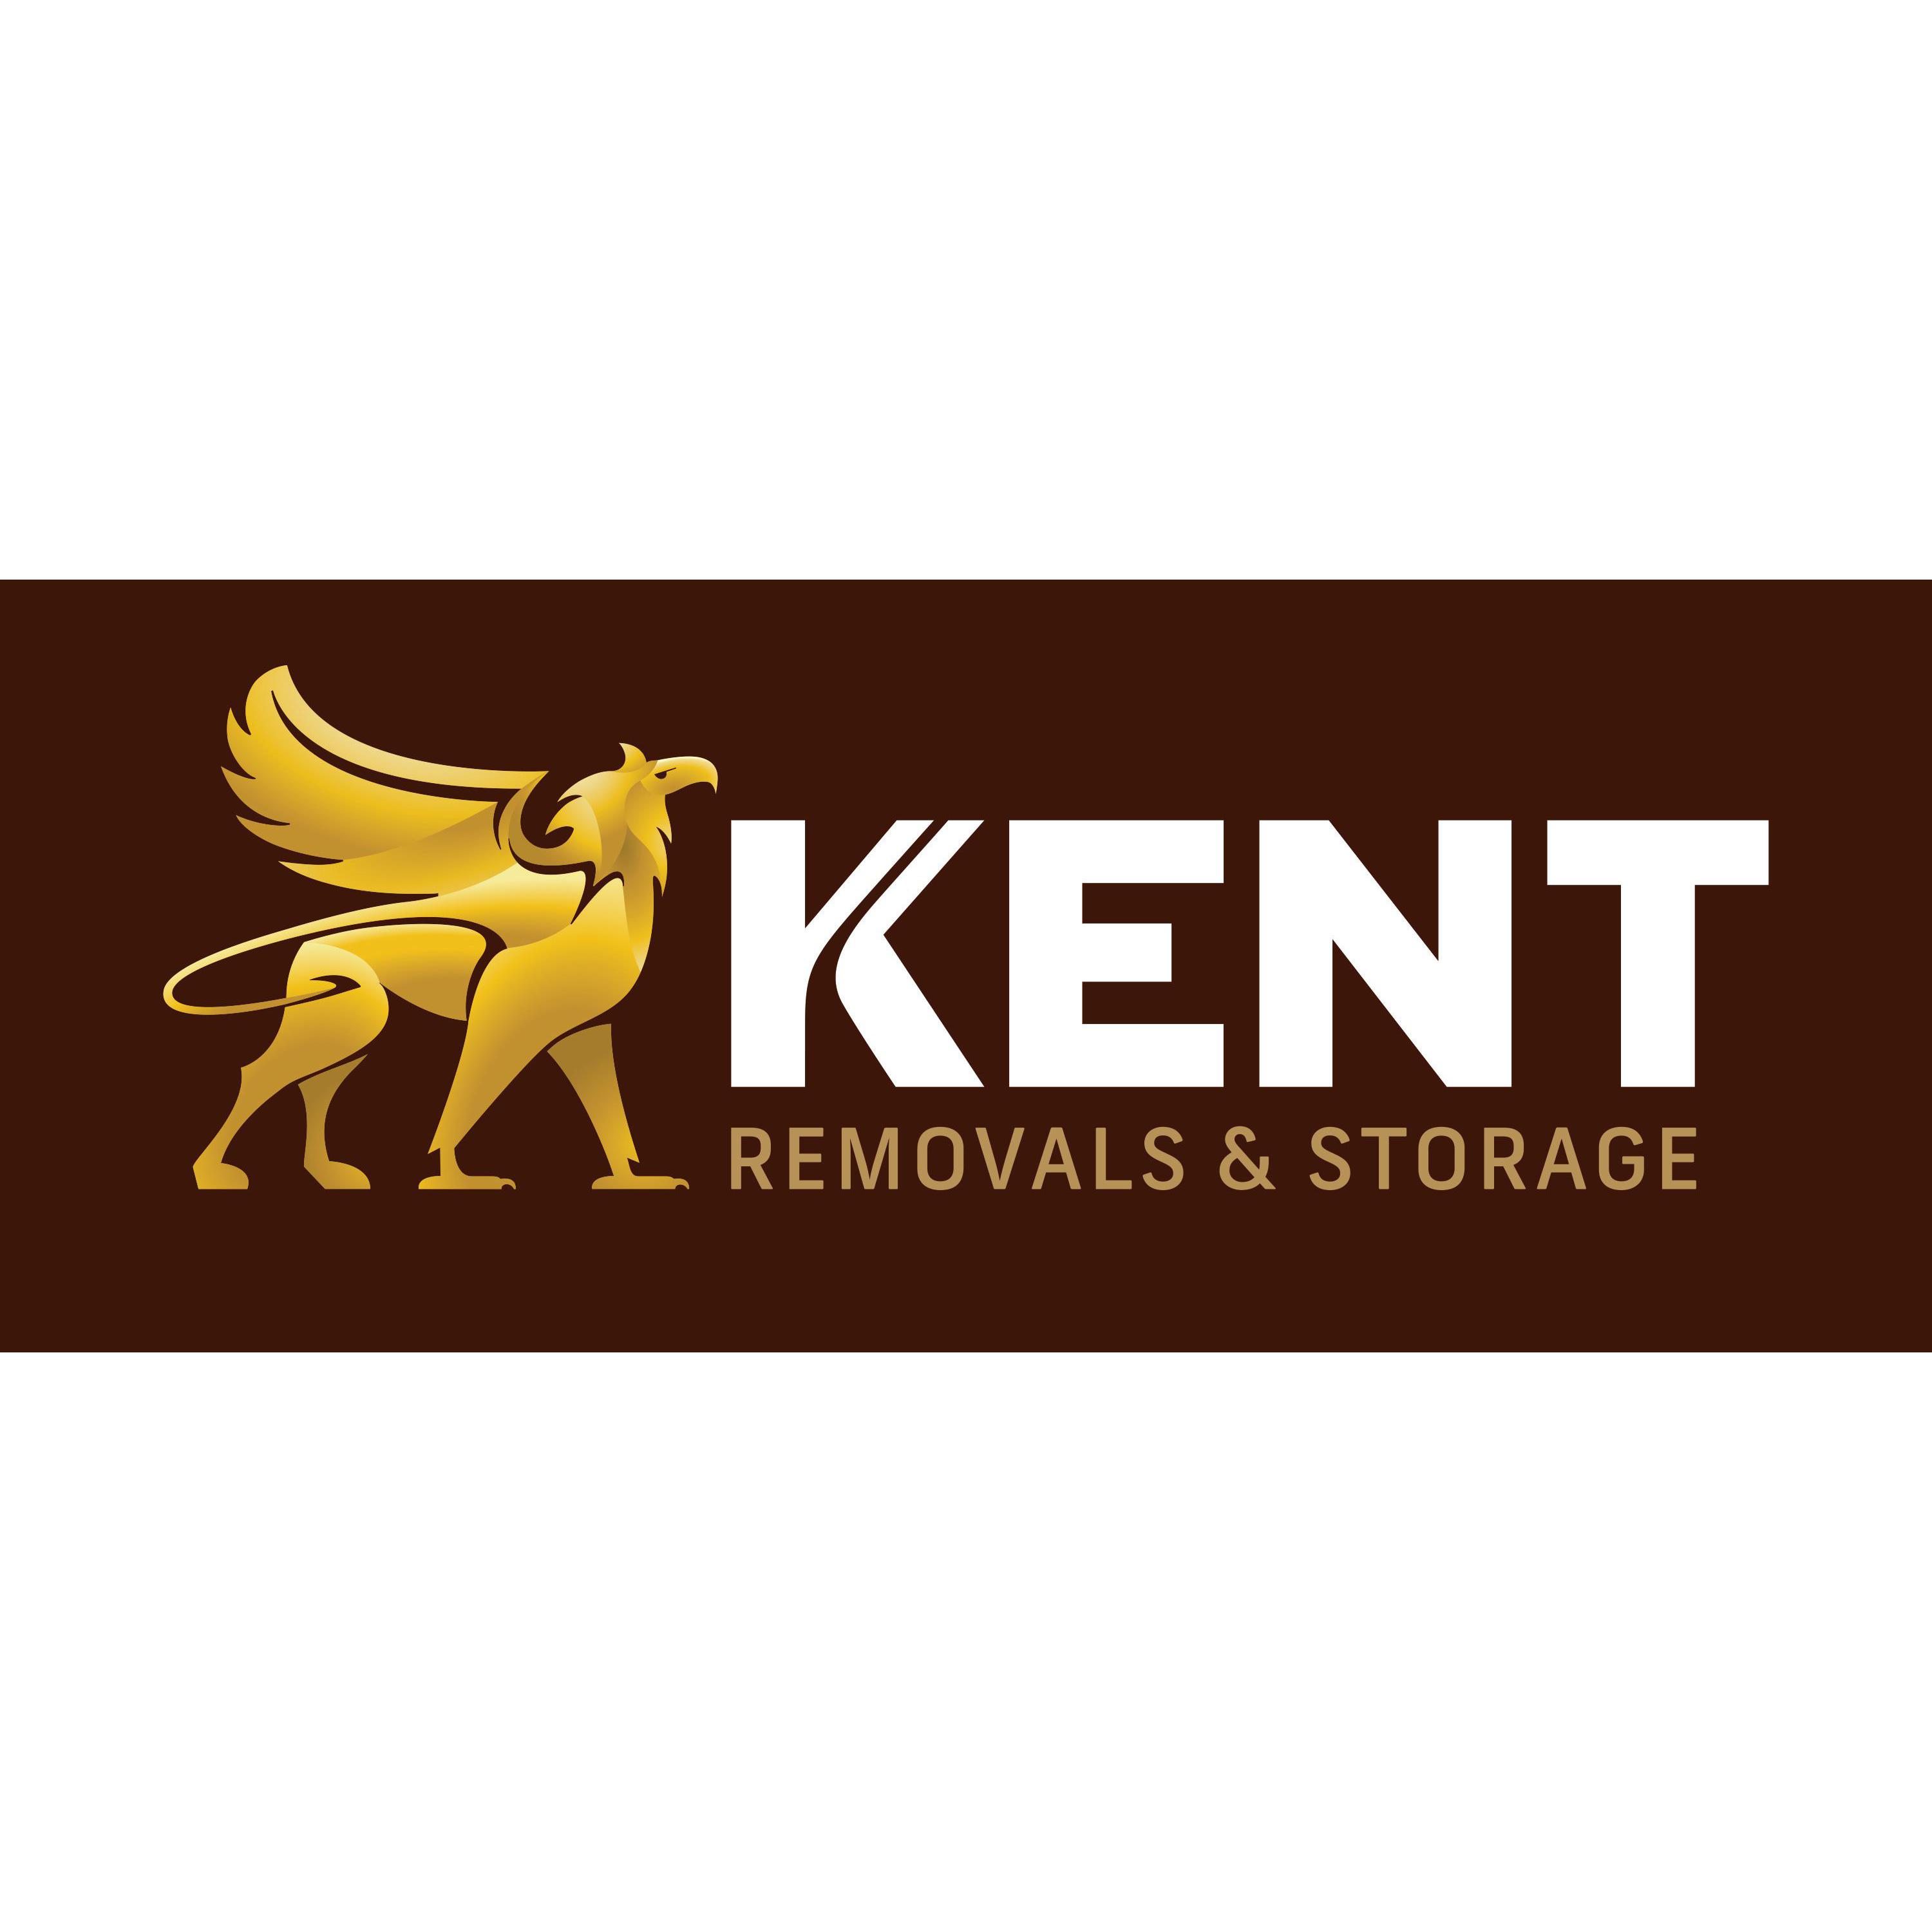 Kent Removals & Storage - Clayton, VIC 3168 - (13) 0064 7980 | ShowMeLocal.com